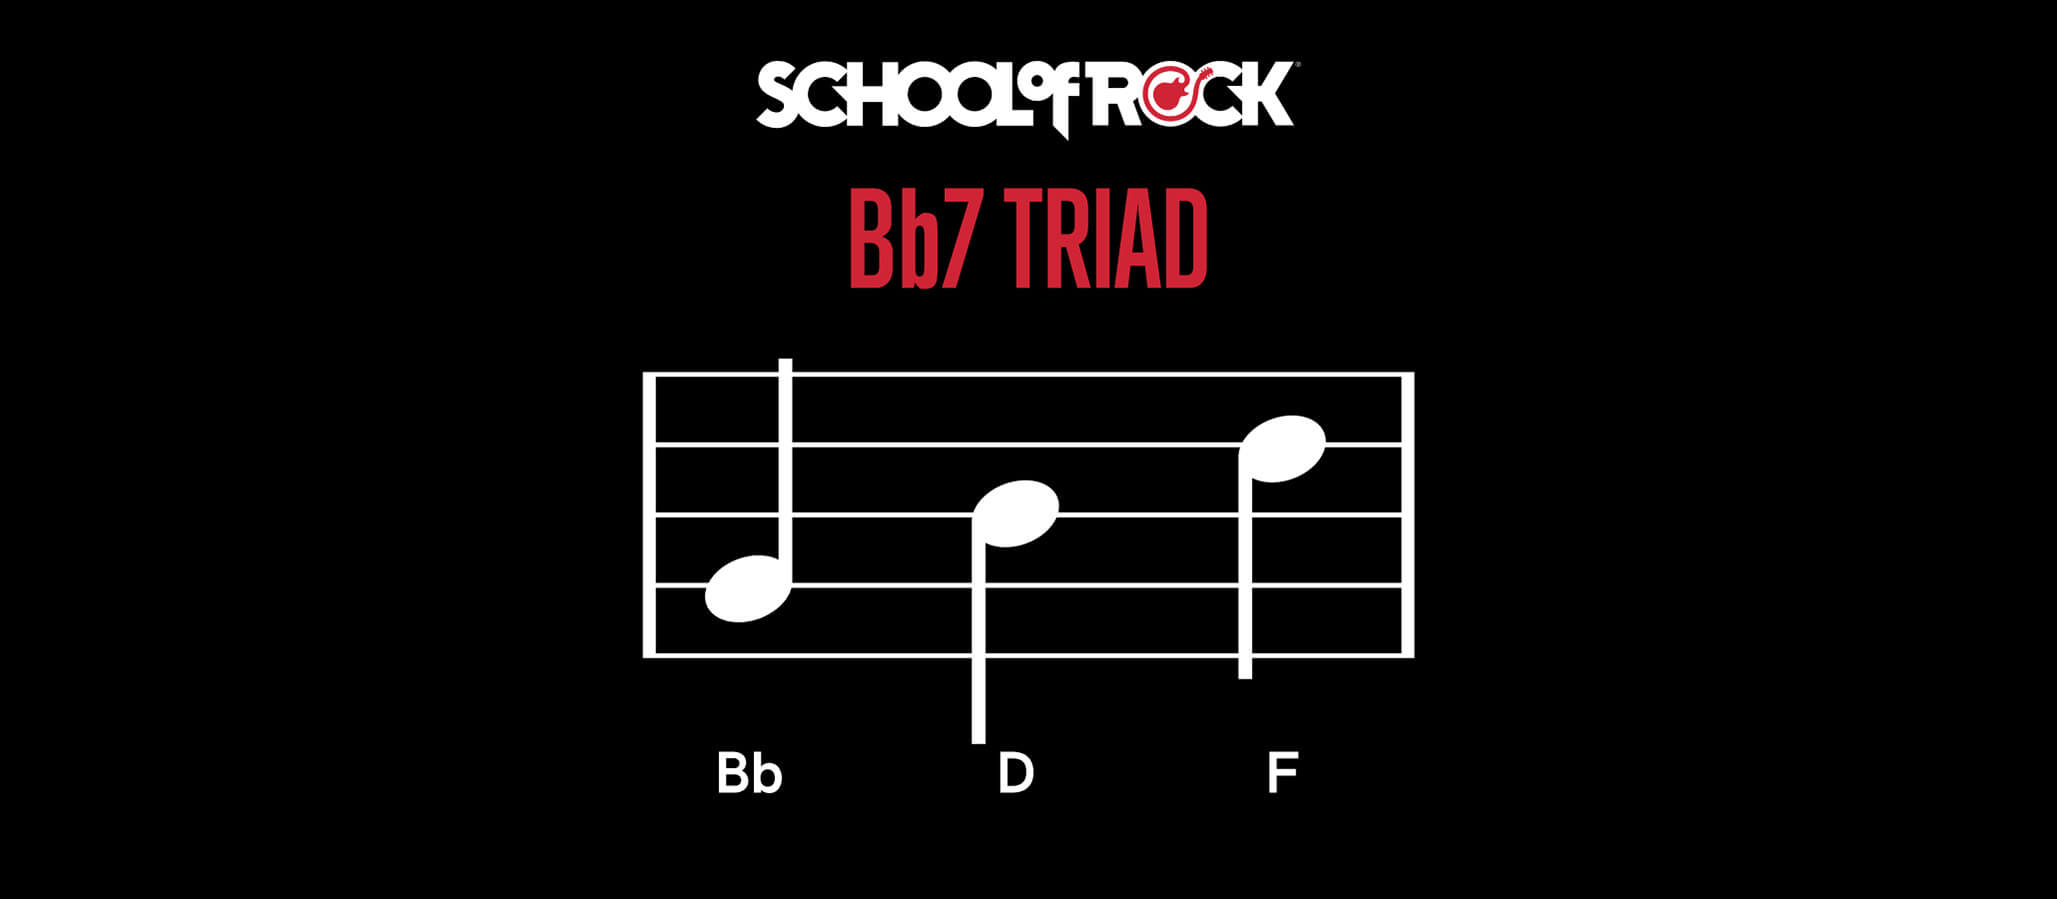 Measure 5 has the Bb7 triad: Bb D F